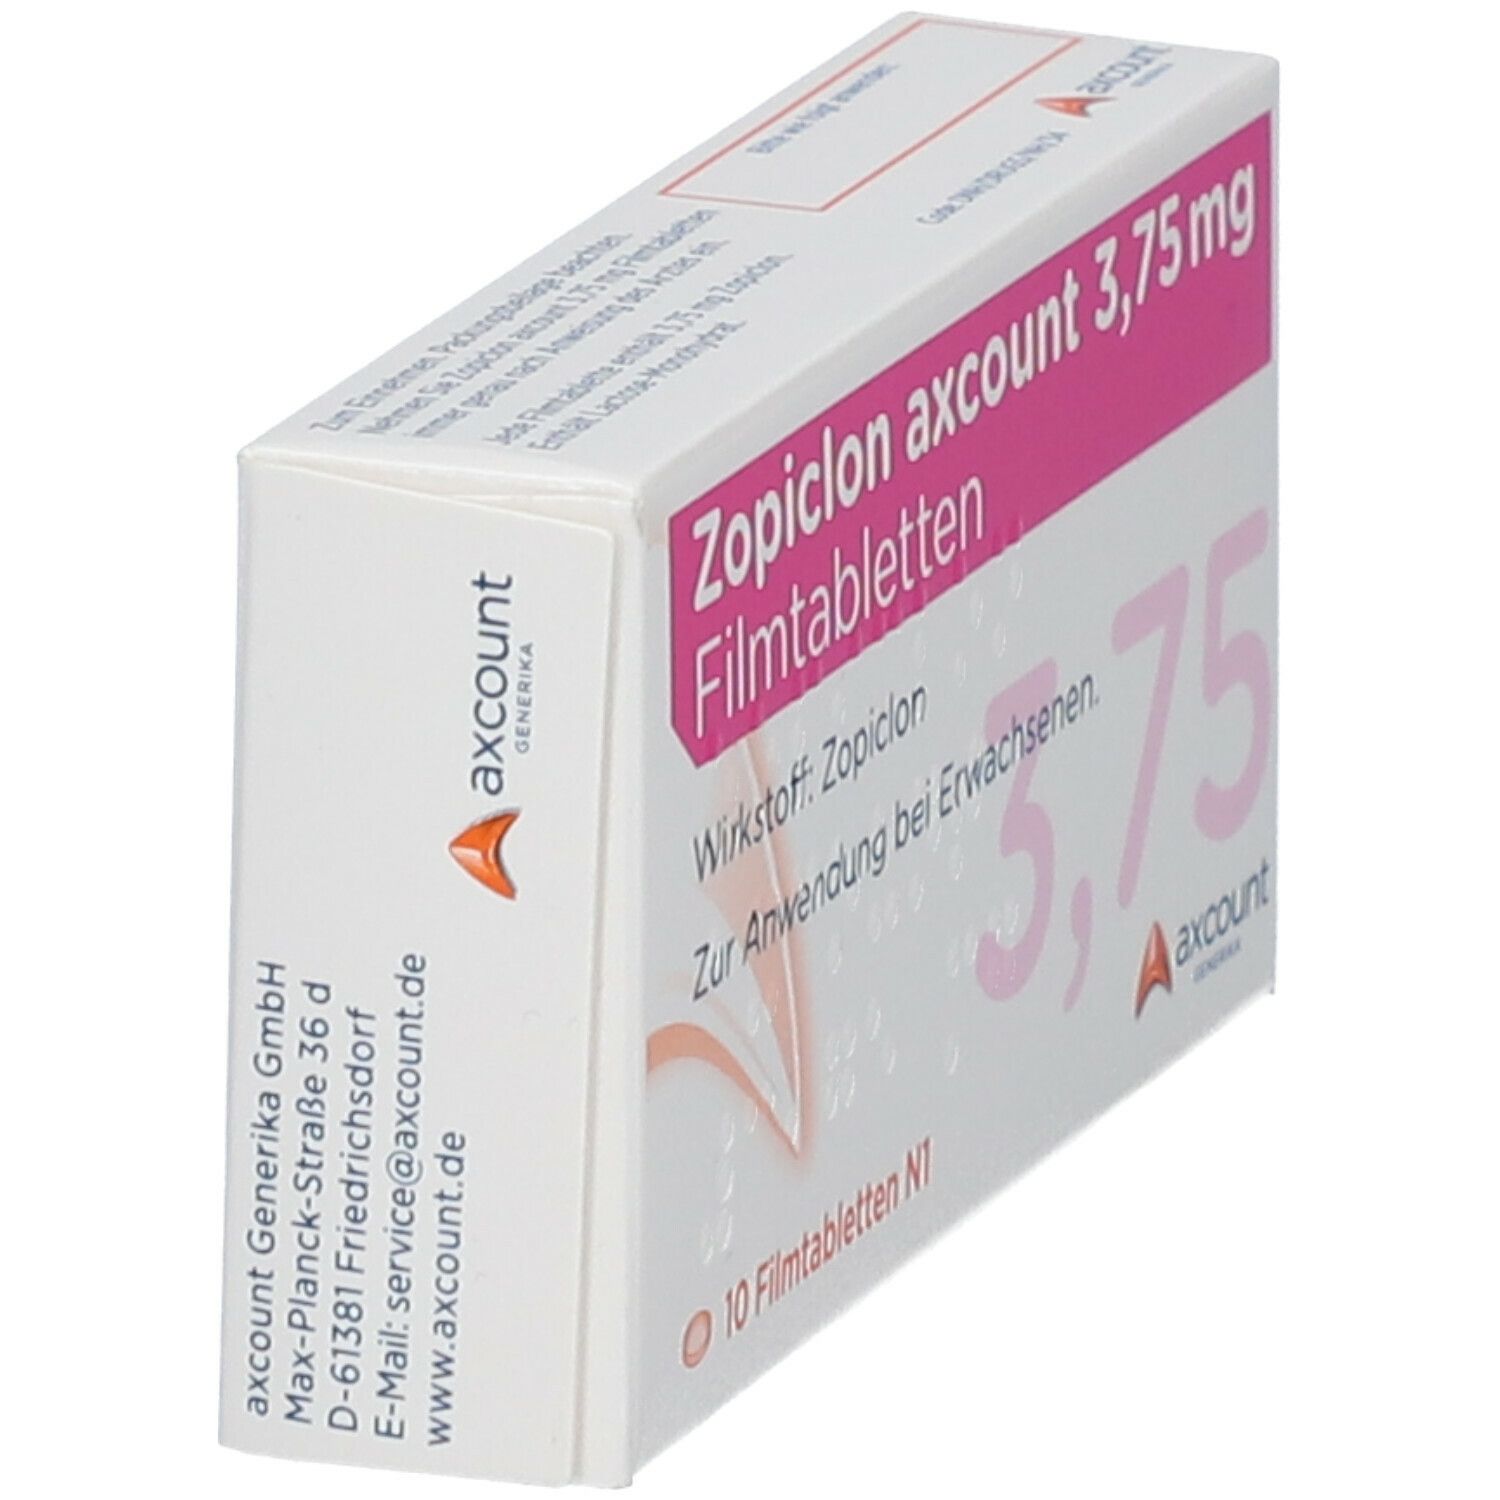 Zopiclon axcount 3,75 mg